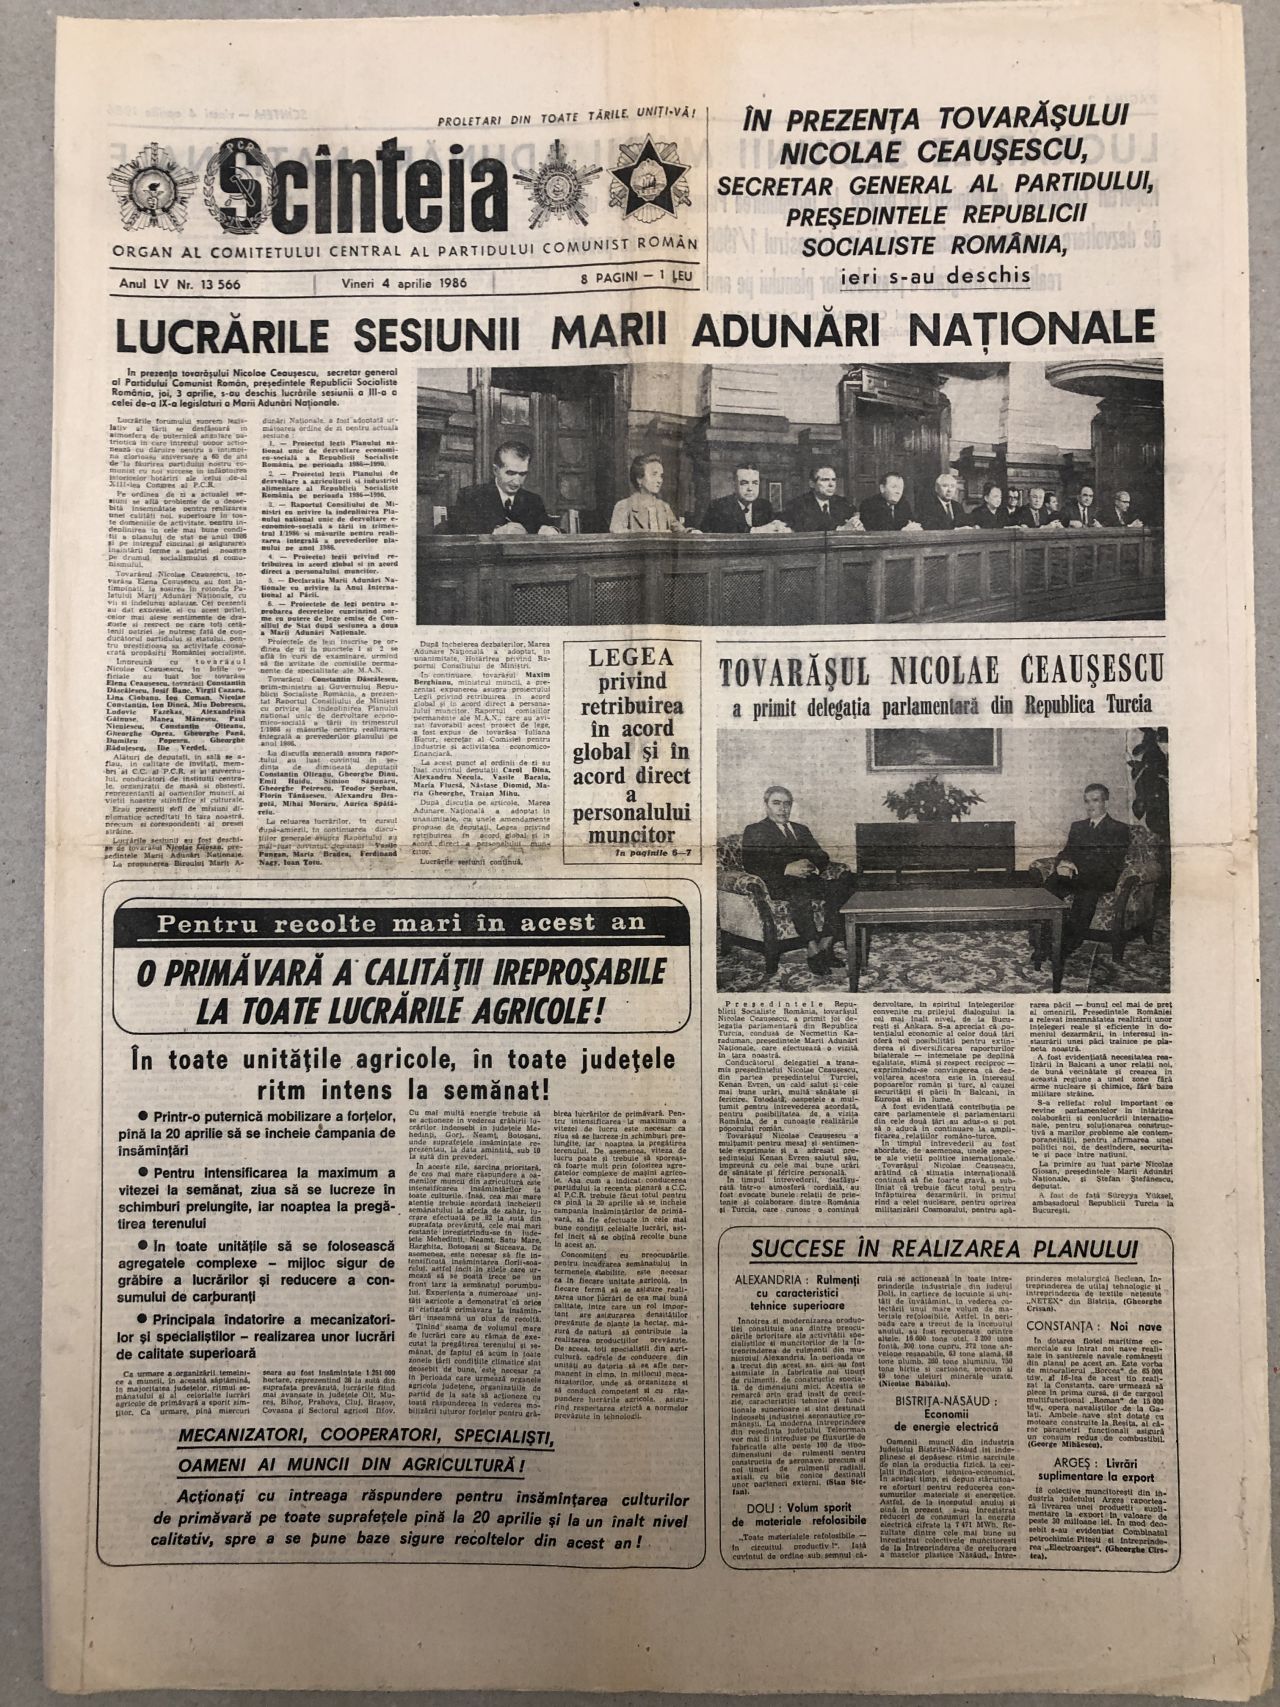 Troublesome compromise discretion Scinteia, ziar vechi comunist, 4 iulie 1986 – kolectionarul.ro